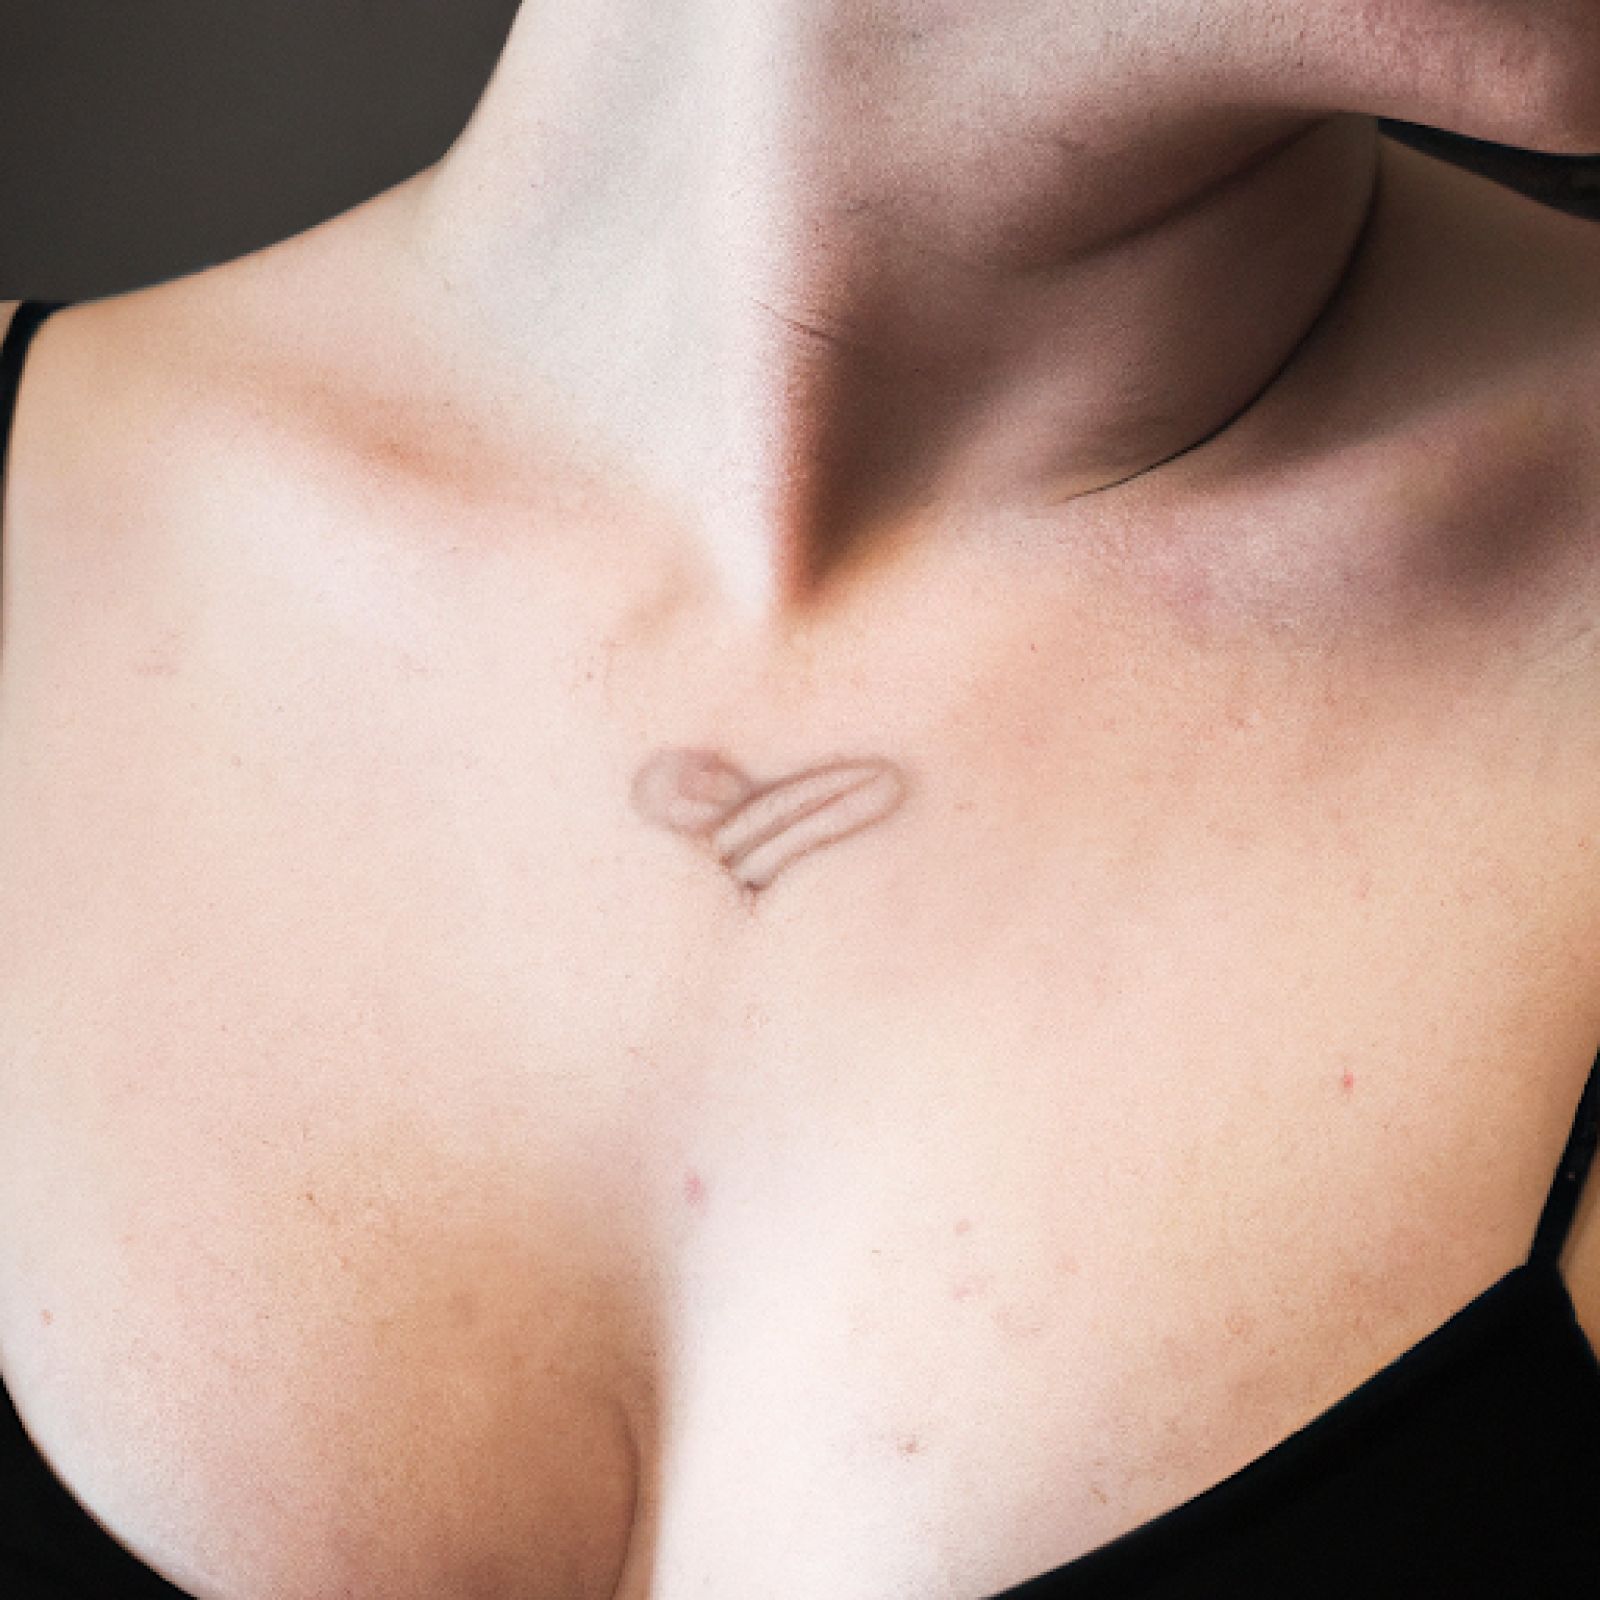 Heart tattoo on sternum for women